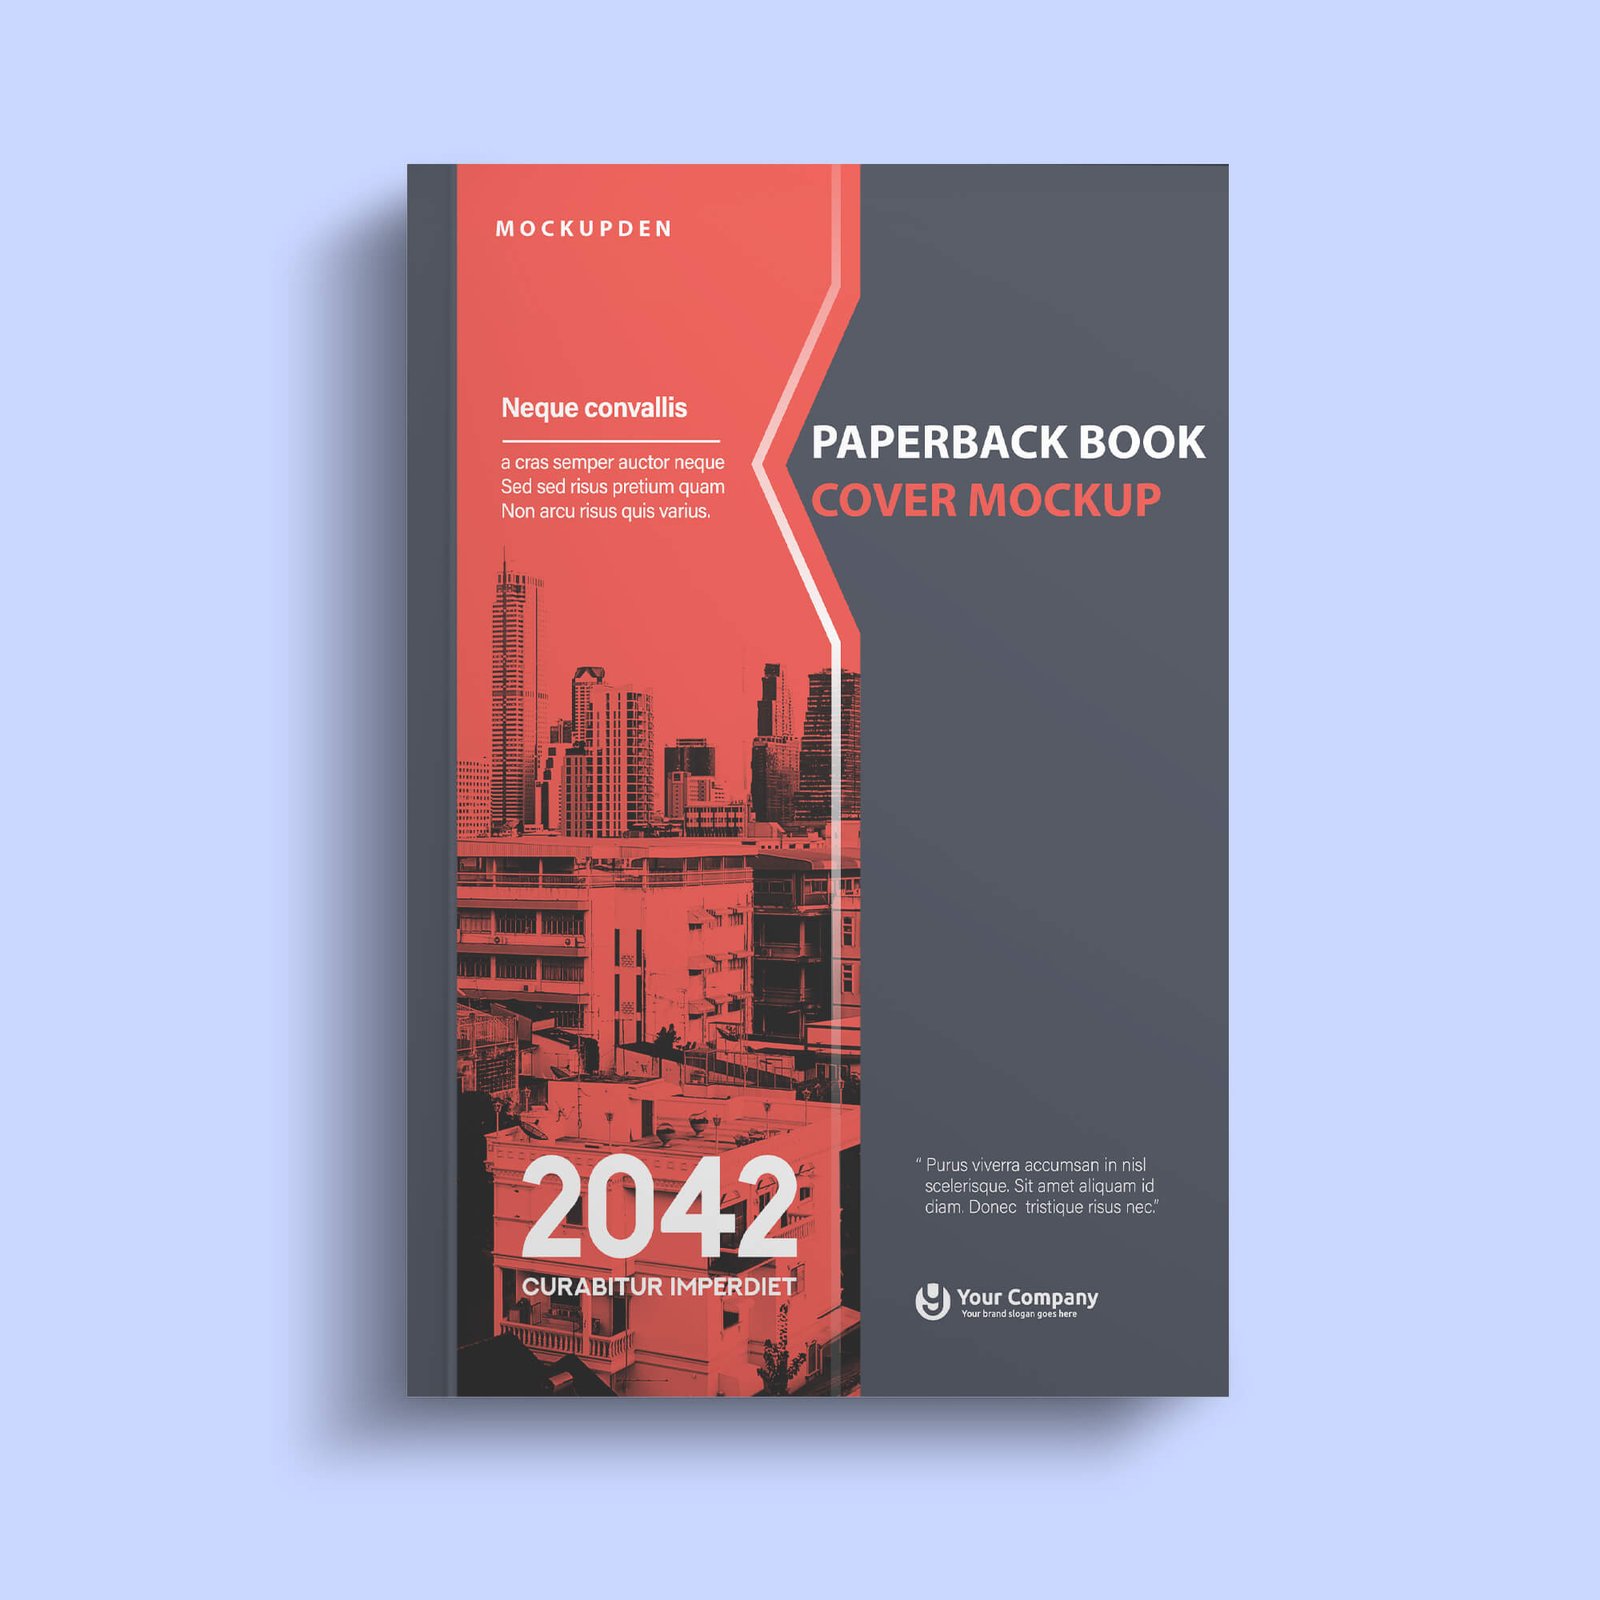 Design Free Paperback Book Cover Mockup PSD Template